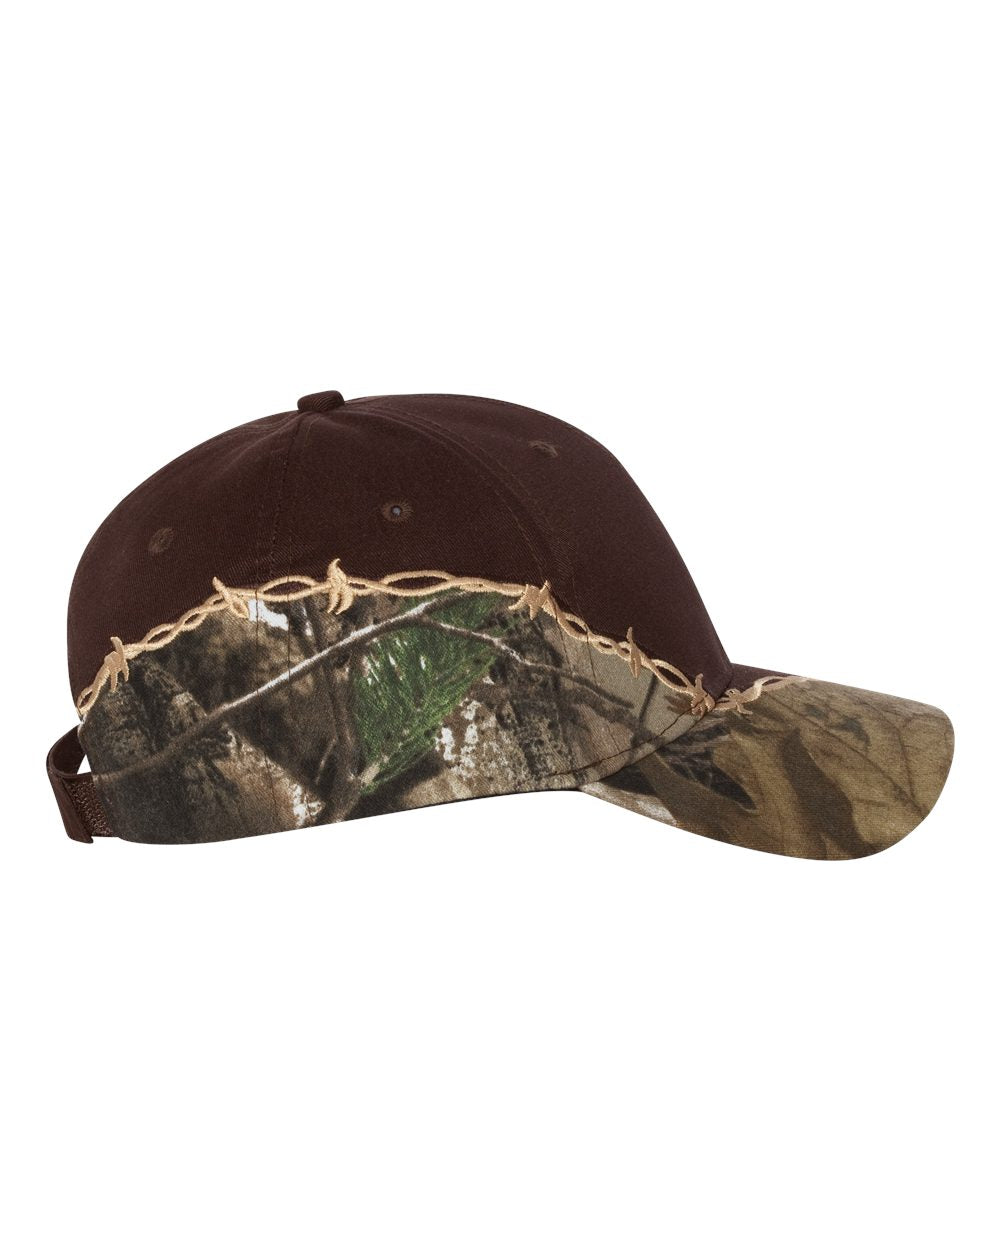 "Hunting Season" Hat 2 of 3